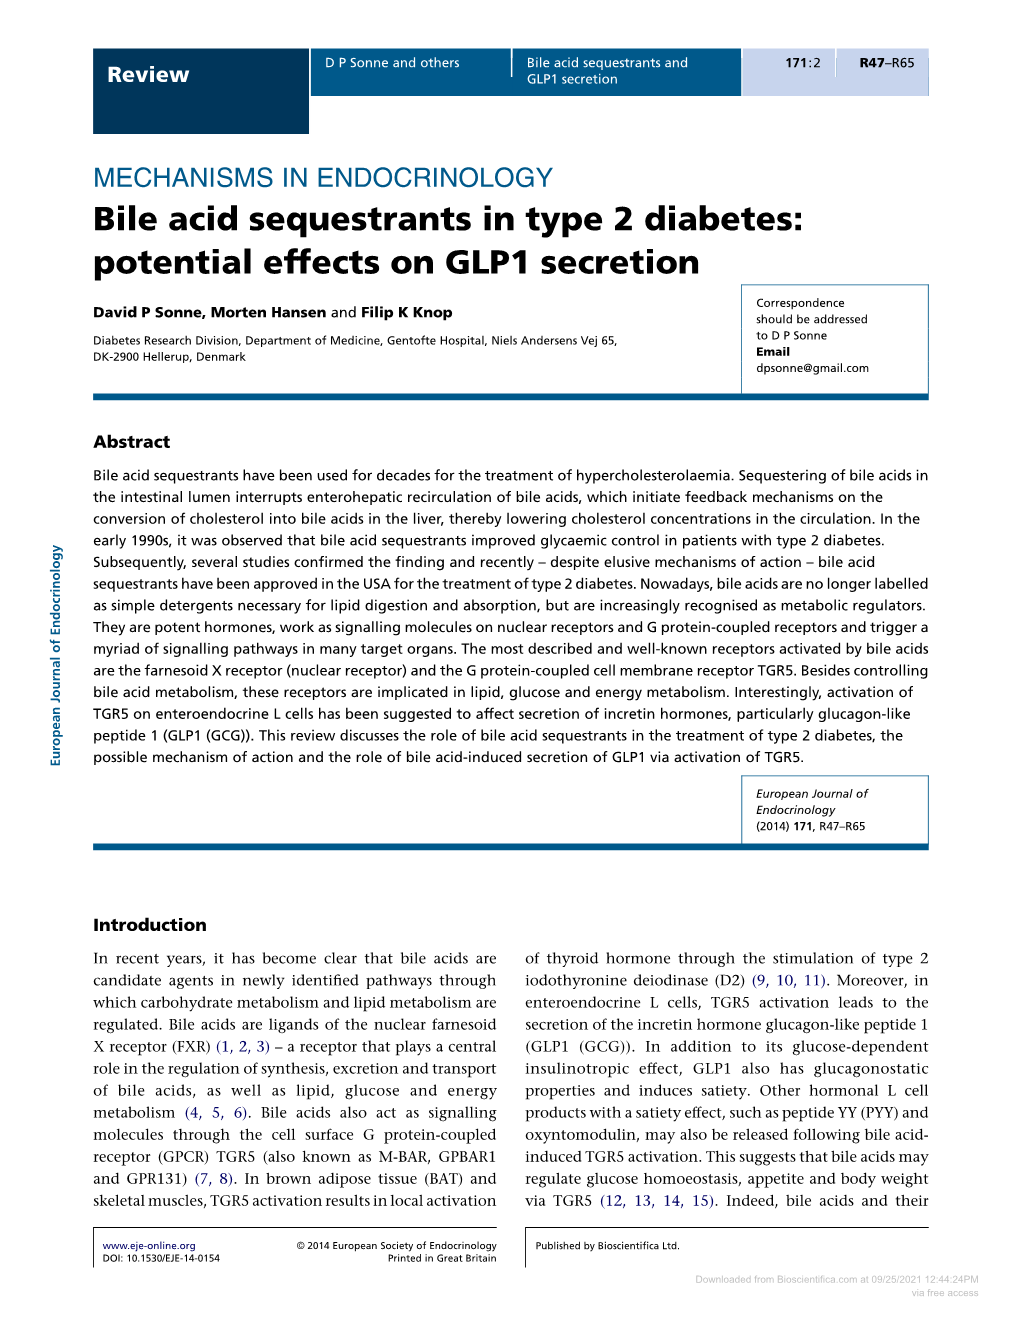 Bile Acid Sequestrants in Type 2 Diabetes: Potential Effects on GLP1 Secretion